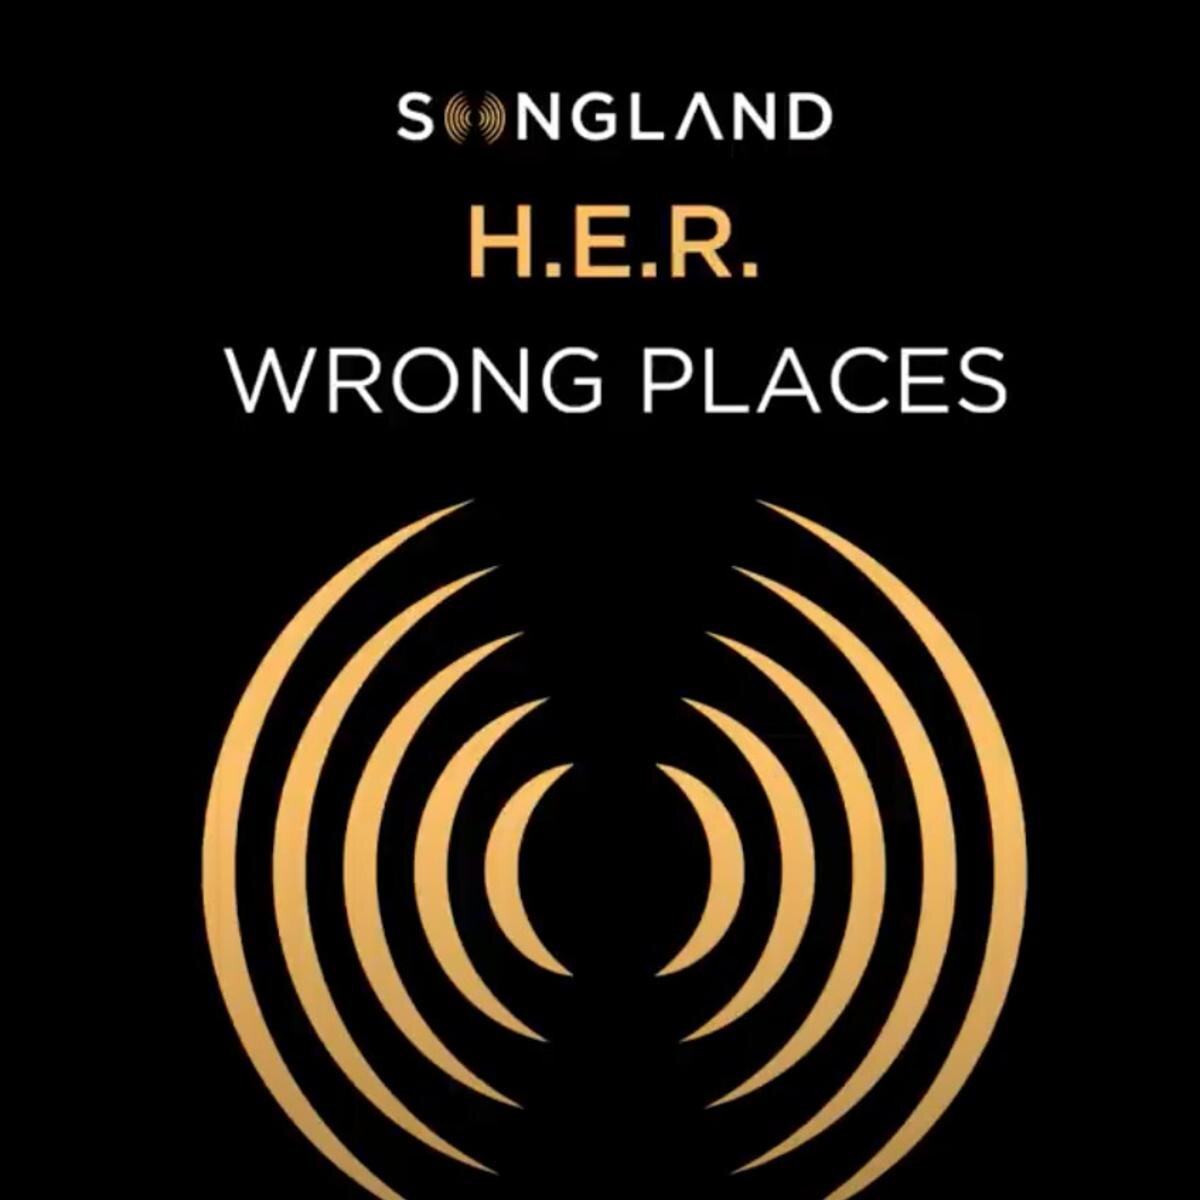 H.E.R. "Wrong Places" (Copy)